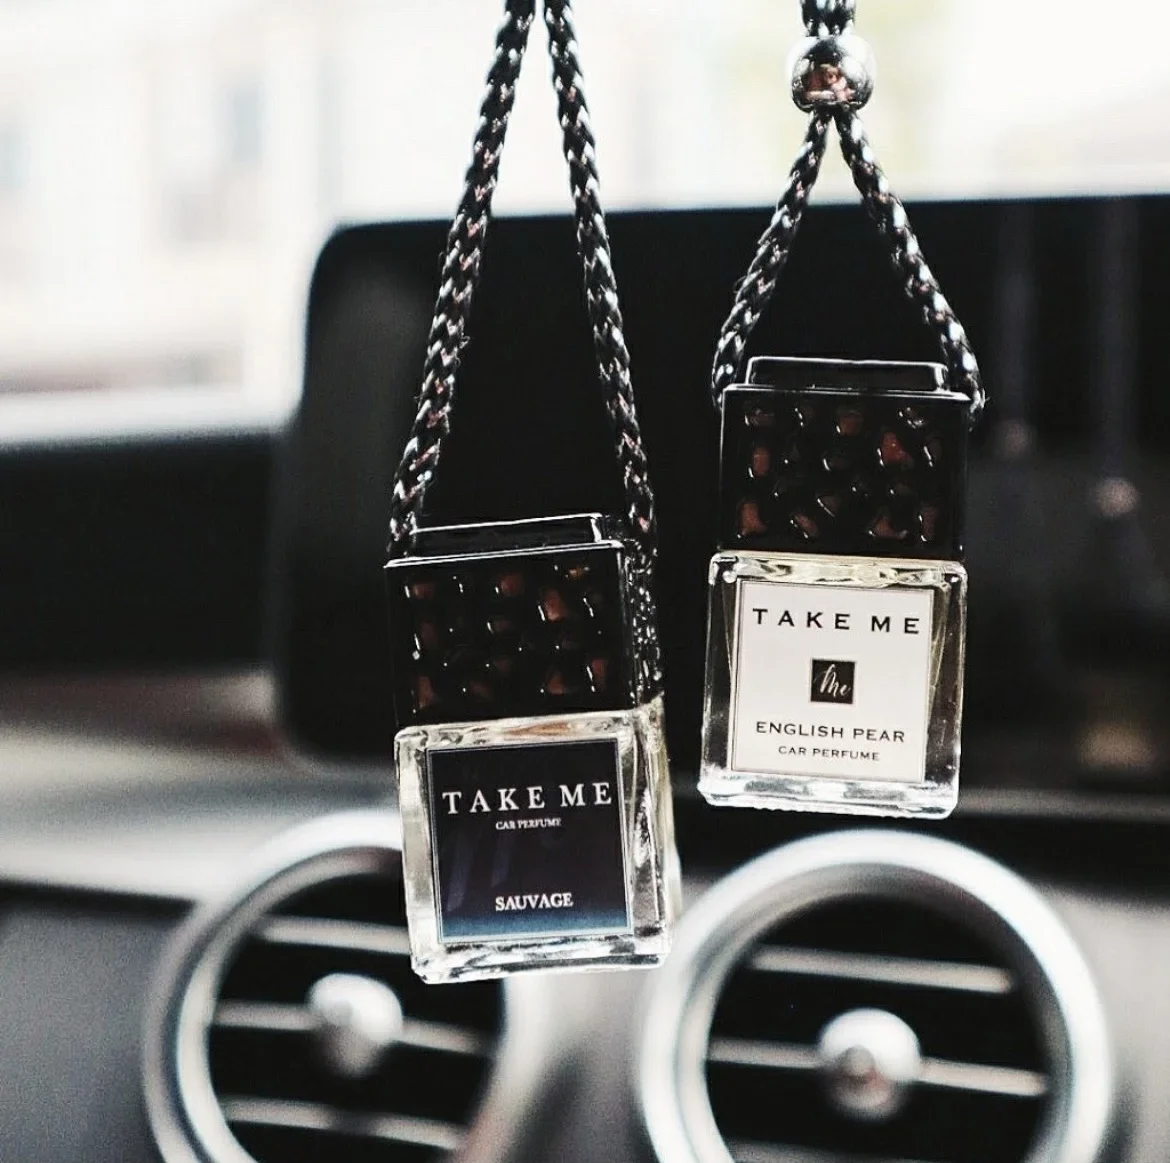 Luxury Scent Car Hanging Fragrance Aroma Air Freshener Diffuser Best Selling English Pear Chloe Chanel Dior Bvlgari YSL Jo Malone Gucci